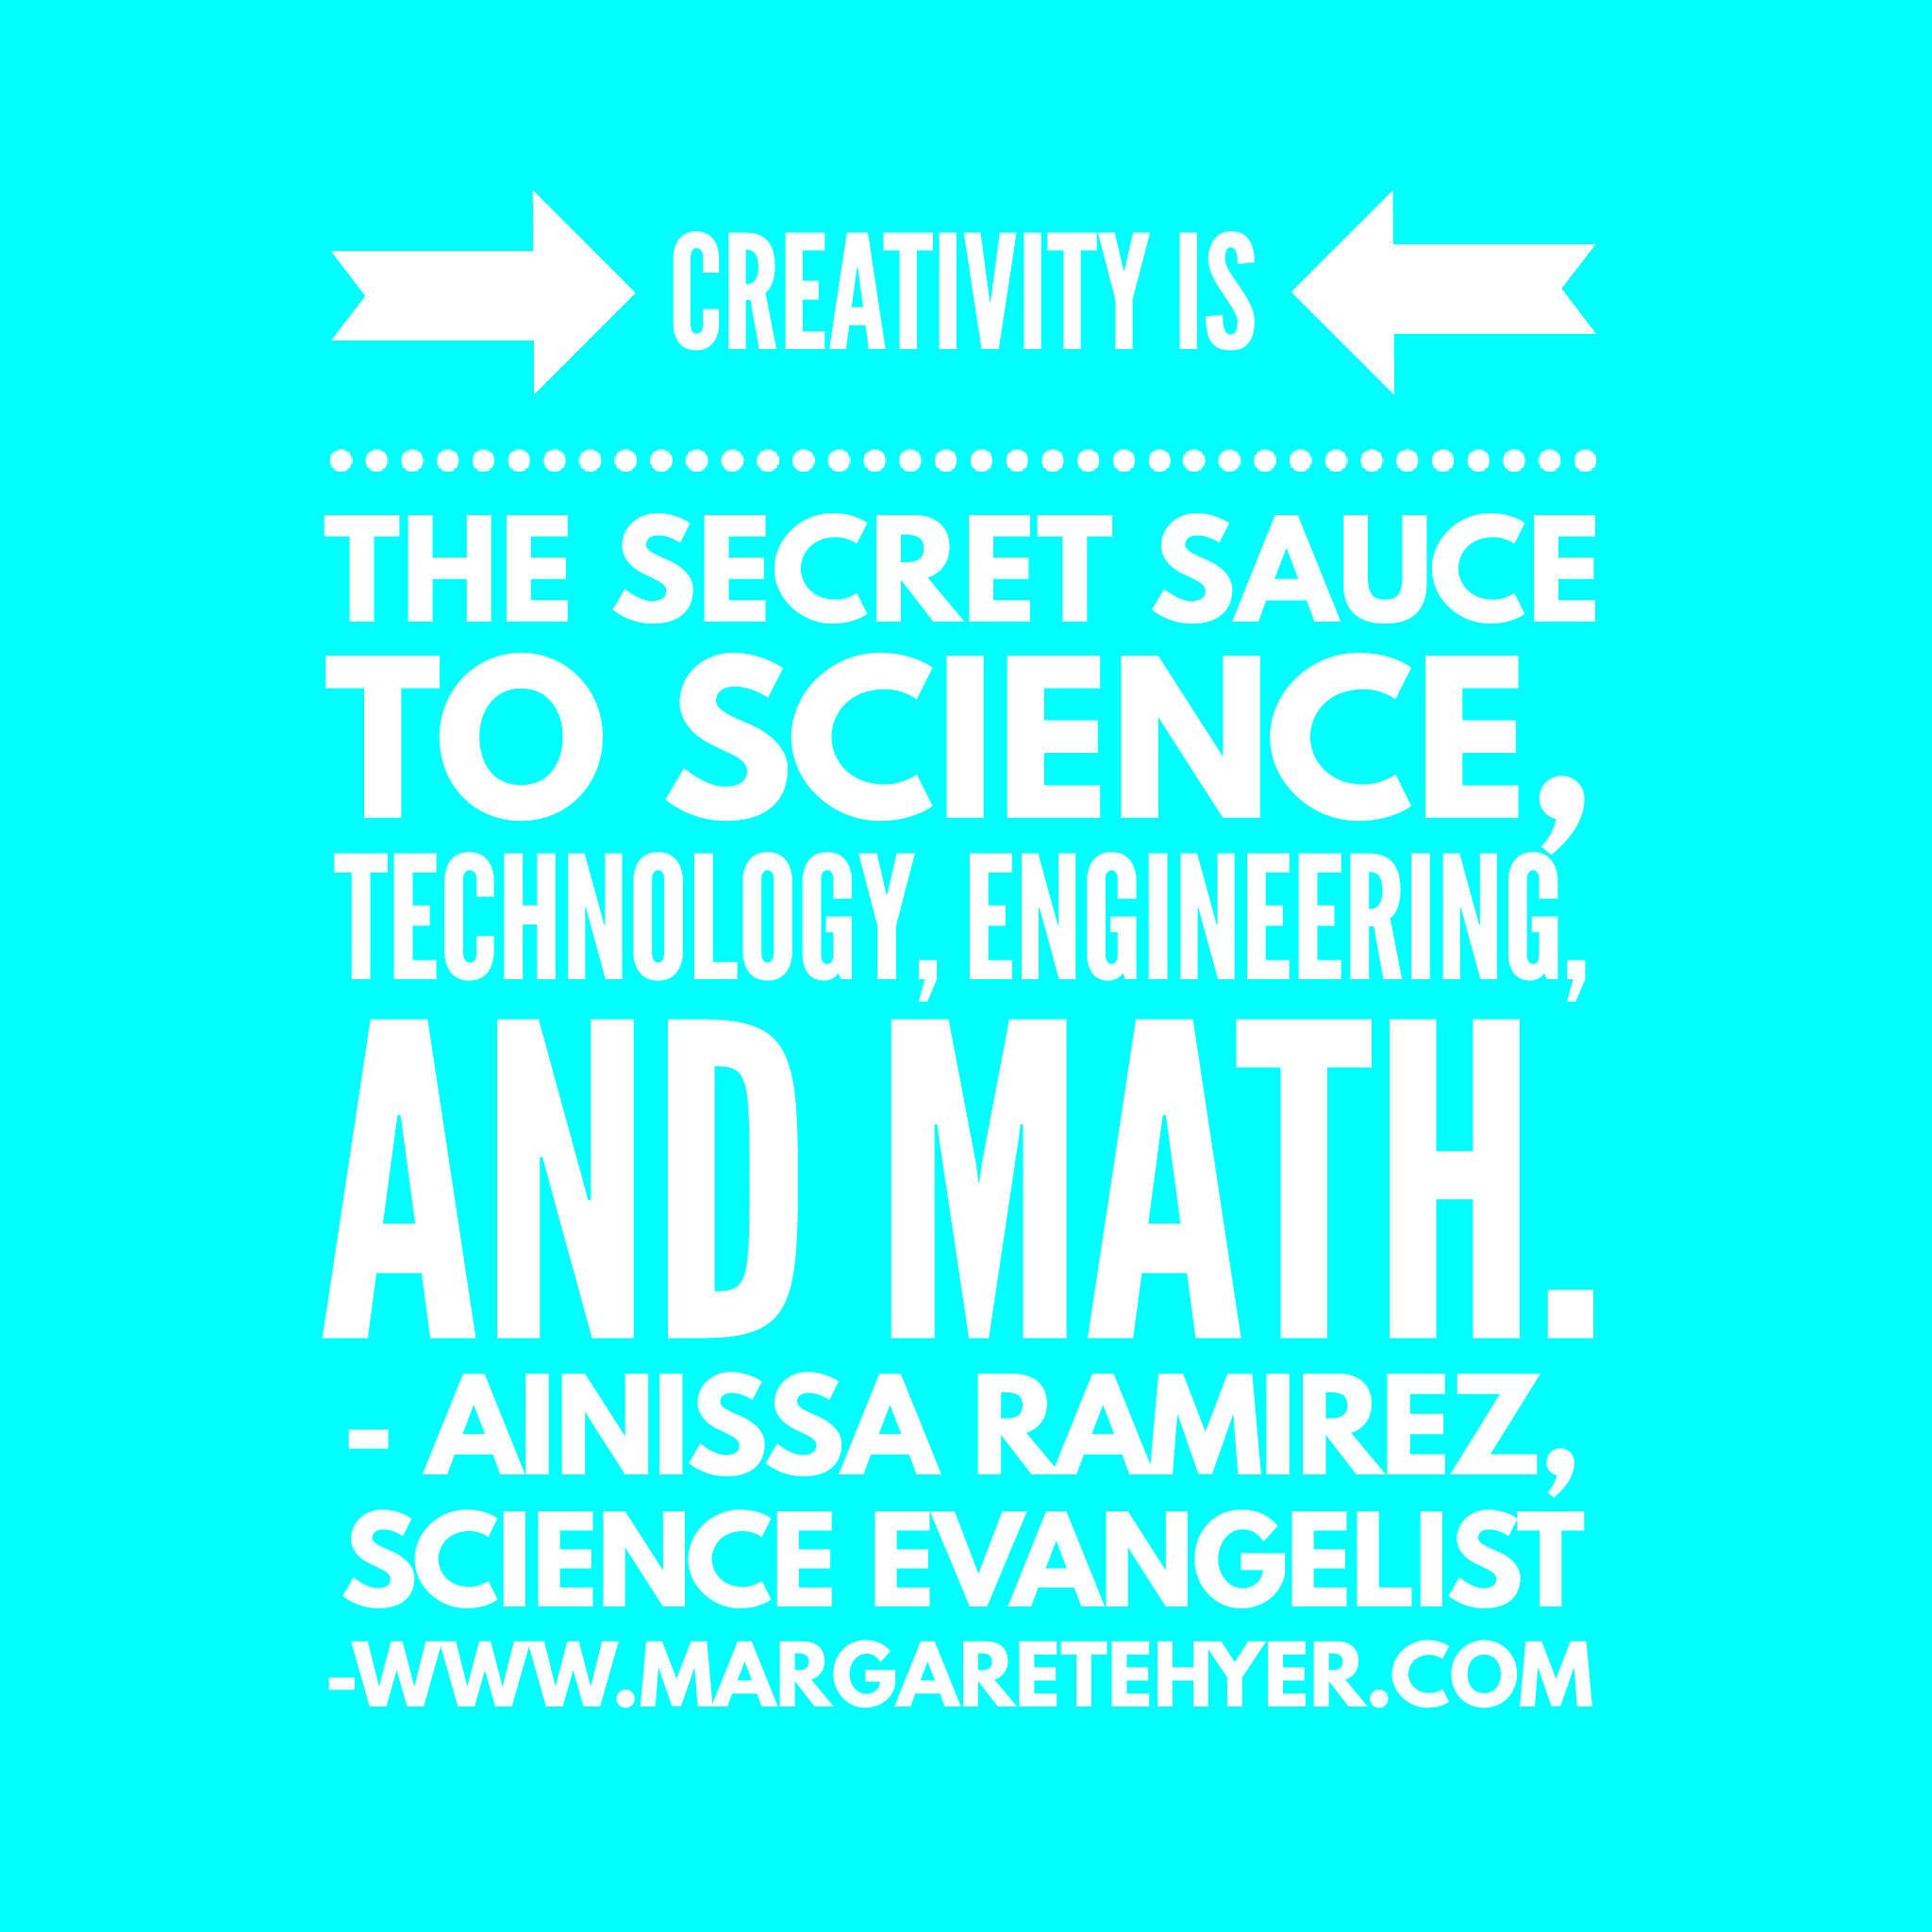 Creativity is the secret sauce to science, technology, engineering, and math. Ainissa Ramirez, Science Evangelist